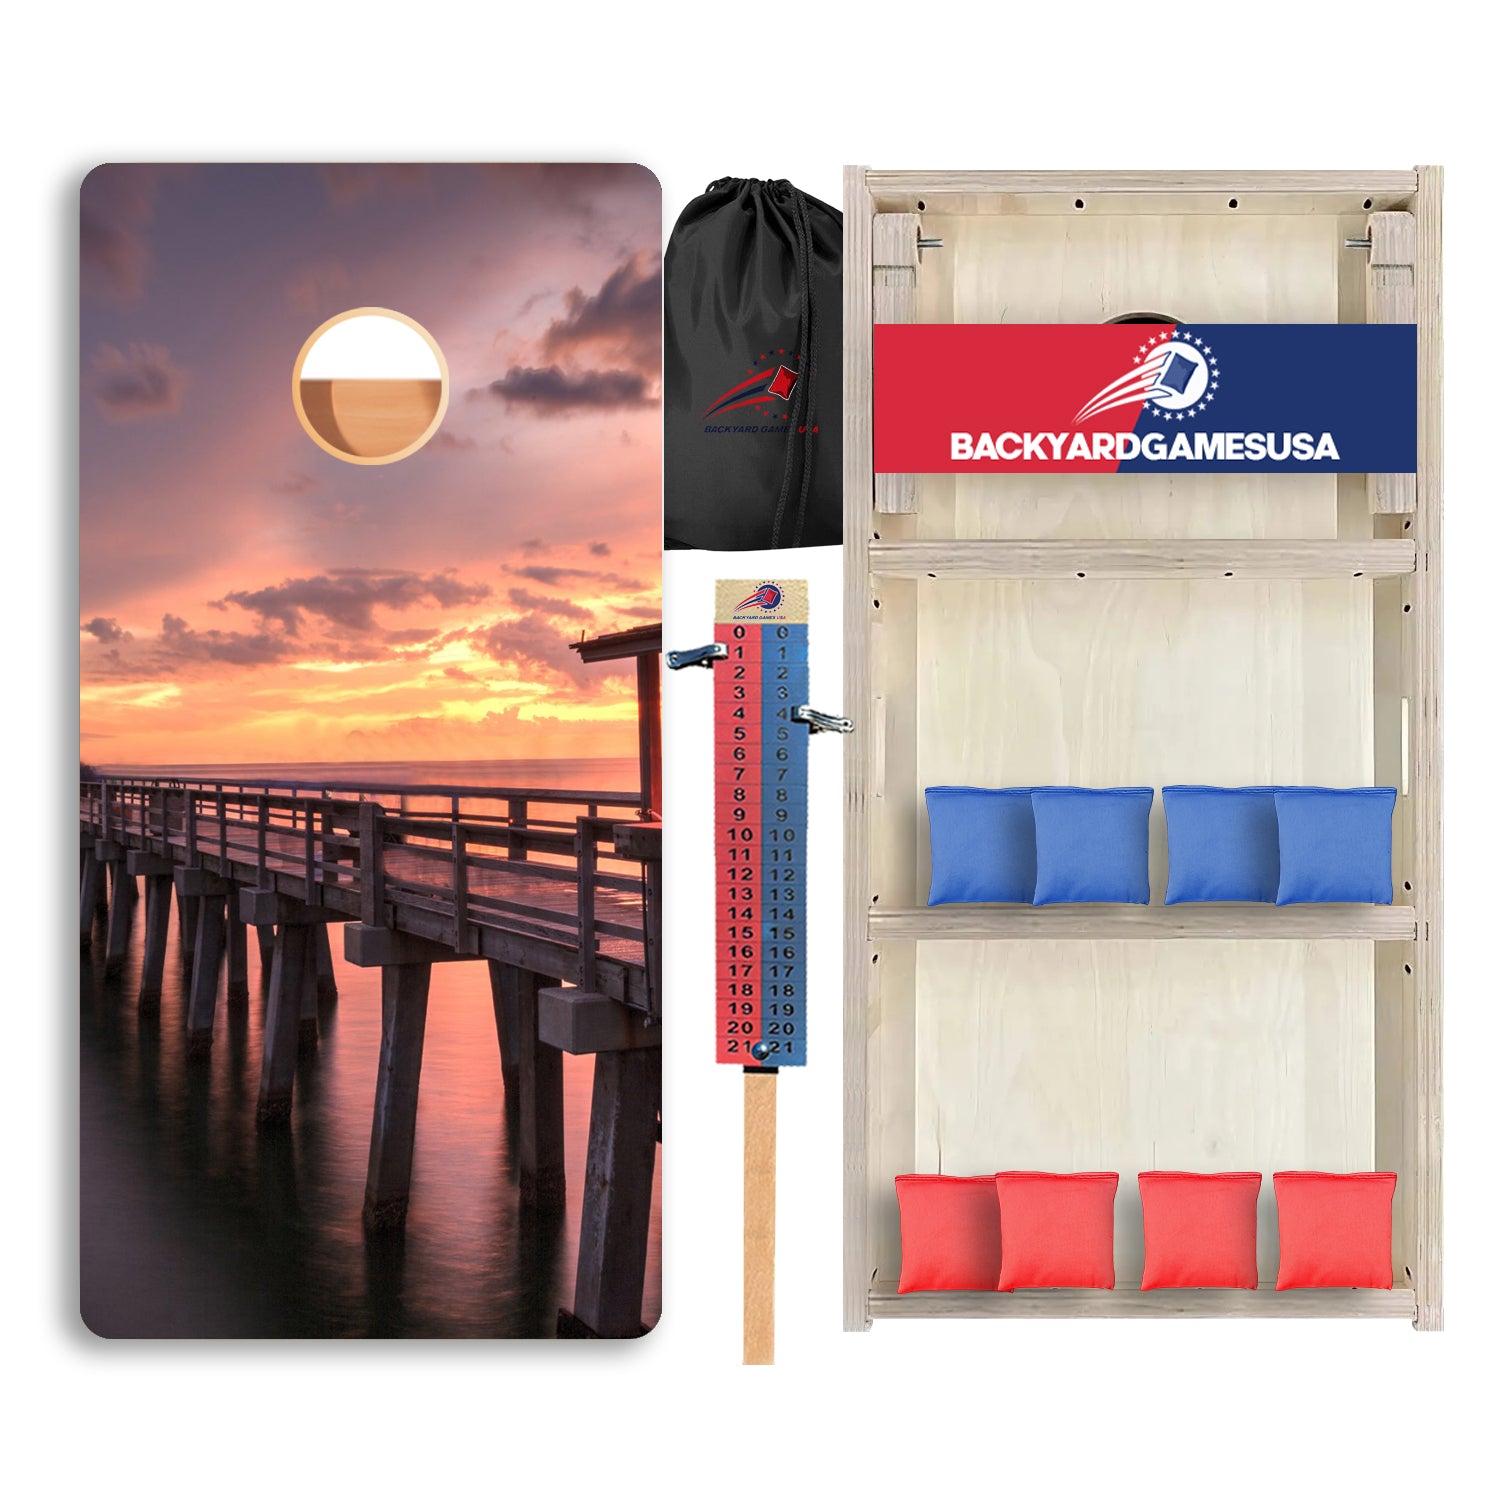 Dock Sunset Professional Cornhole Boards